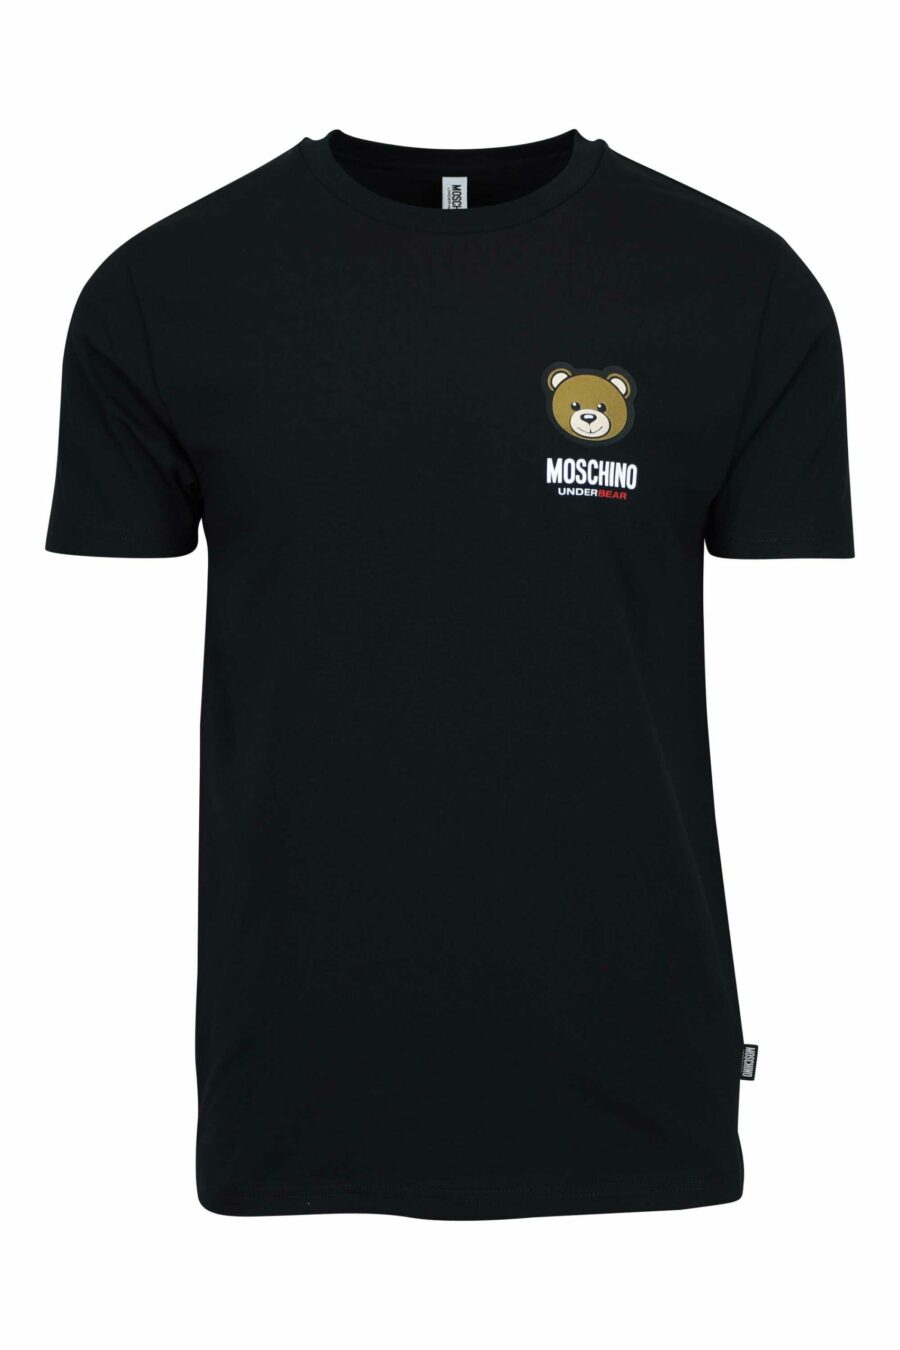 T-shirt preta com mini logótipo de urso "underbear" - 667113605739 scaled